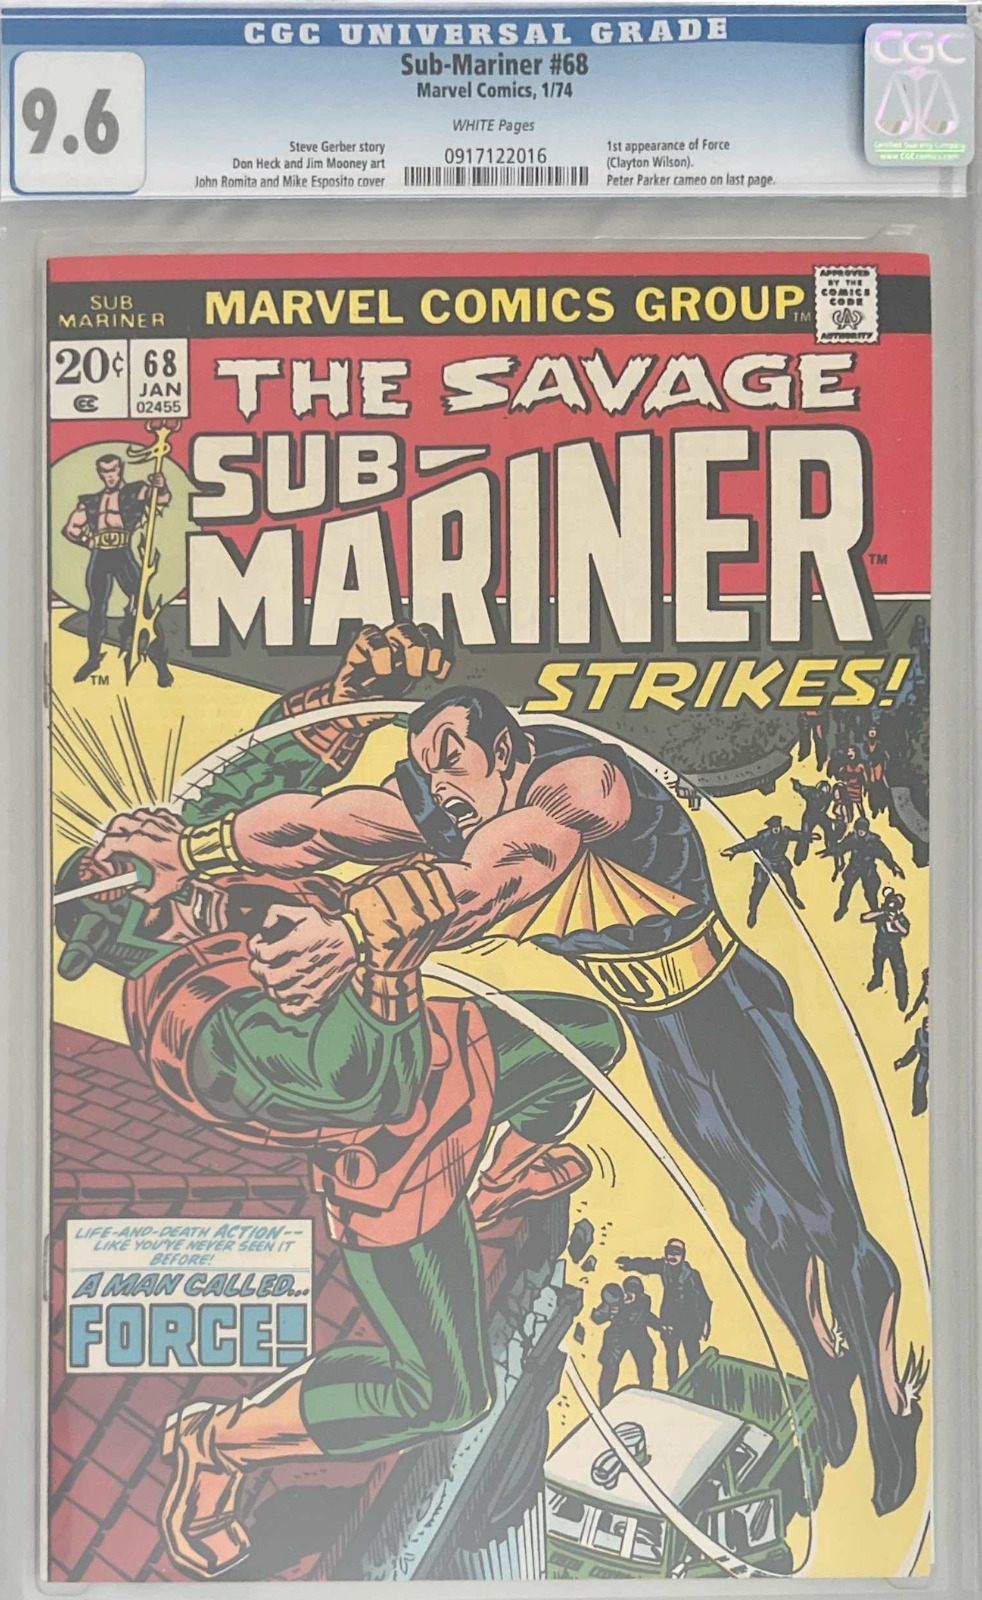 Sub-Mariner #68 Marvel Comics, 1/74 CGC 9.6